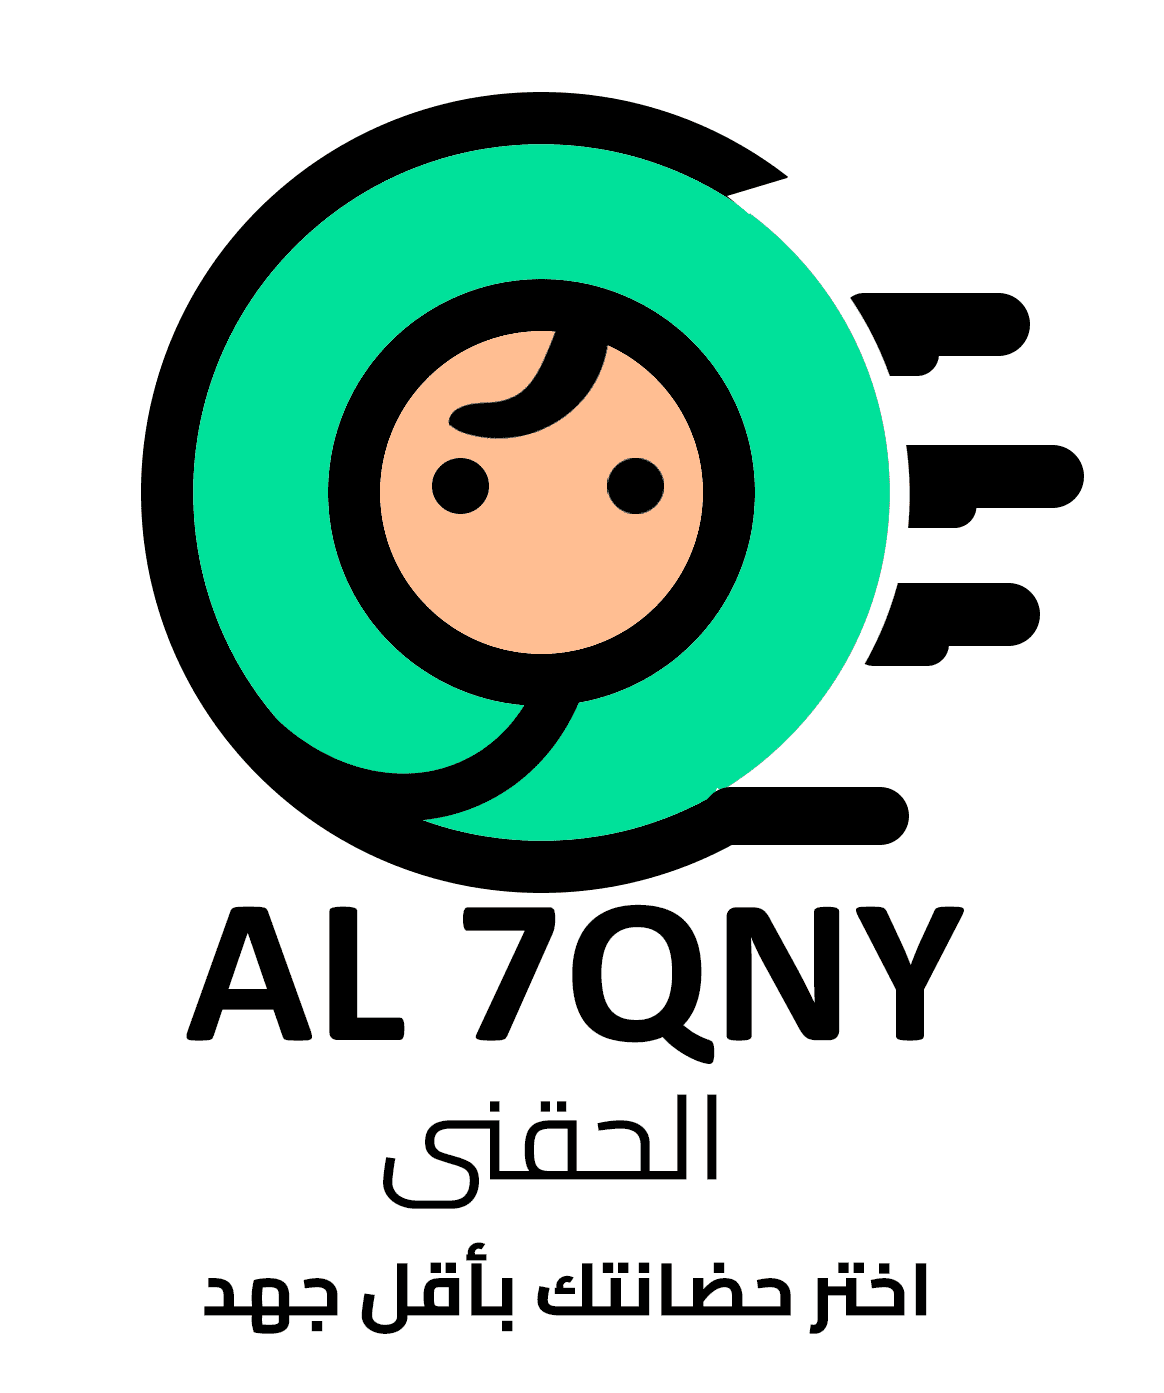 Al-7aqny